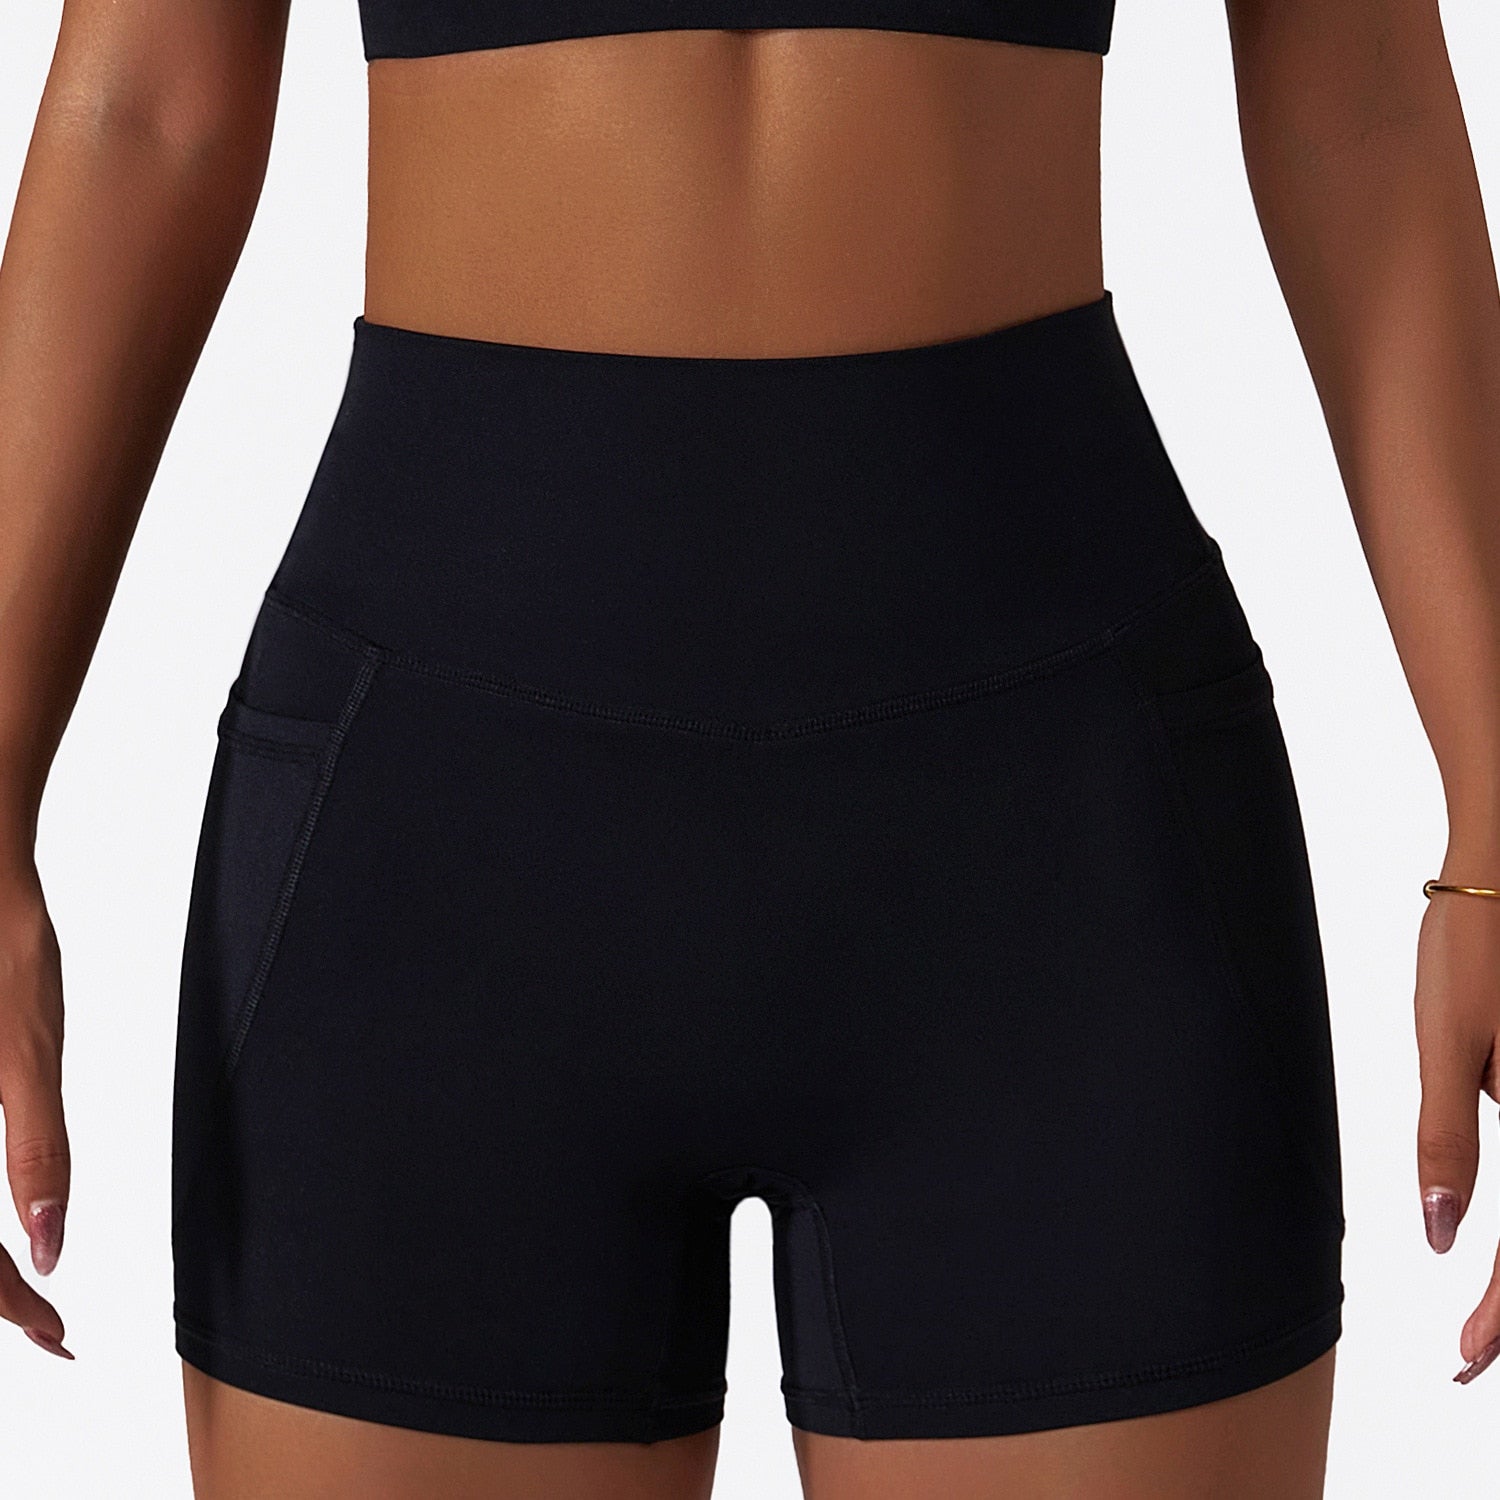 Acheter black Comfortable Skin Friendly High Waist Yoga Shorts